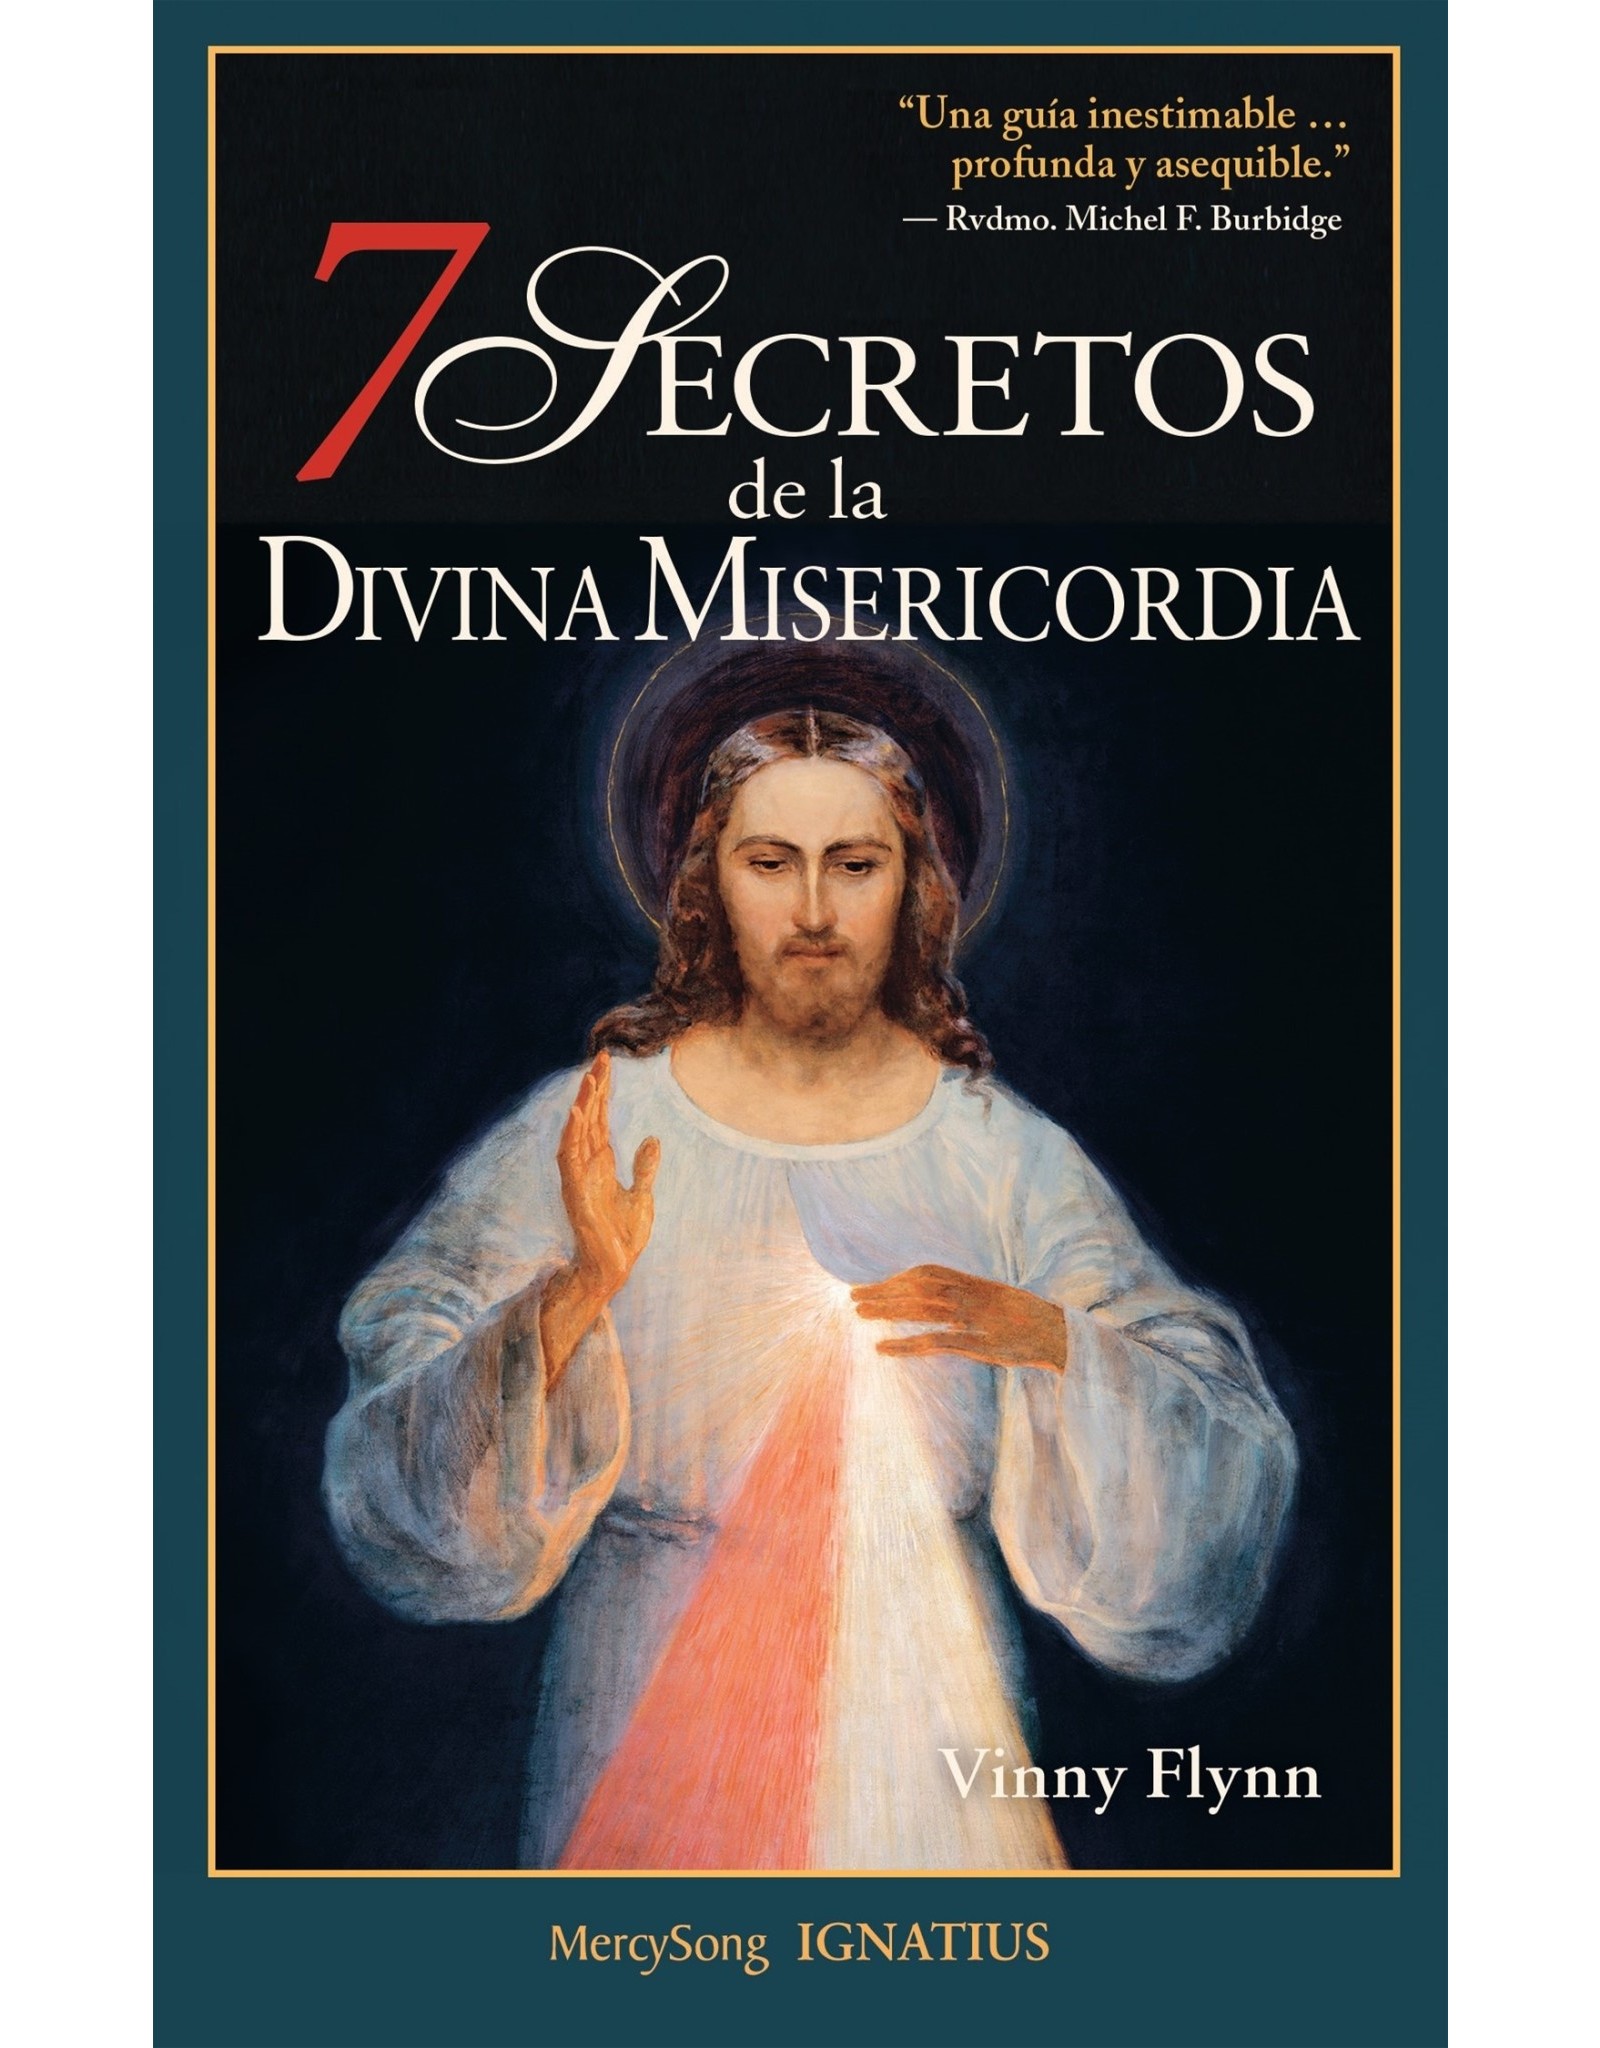 7 Secretos de la Divina Misericordia (7 Secrets of Divine Mercy)